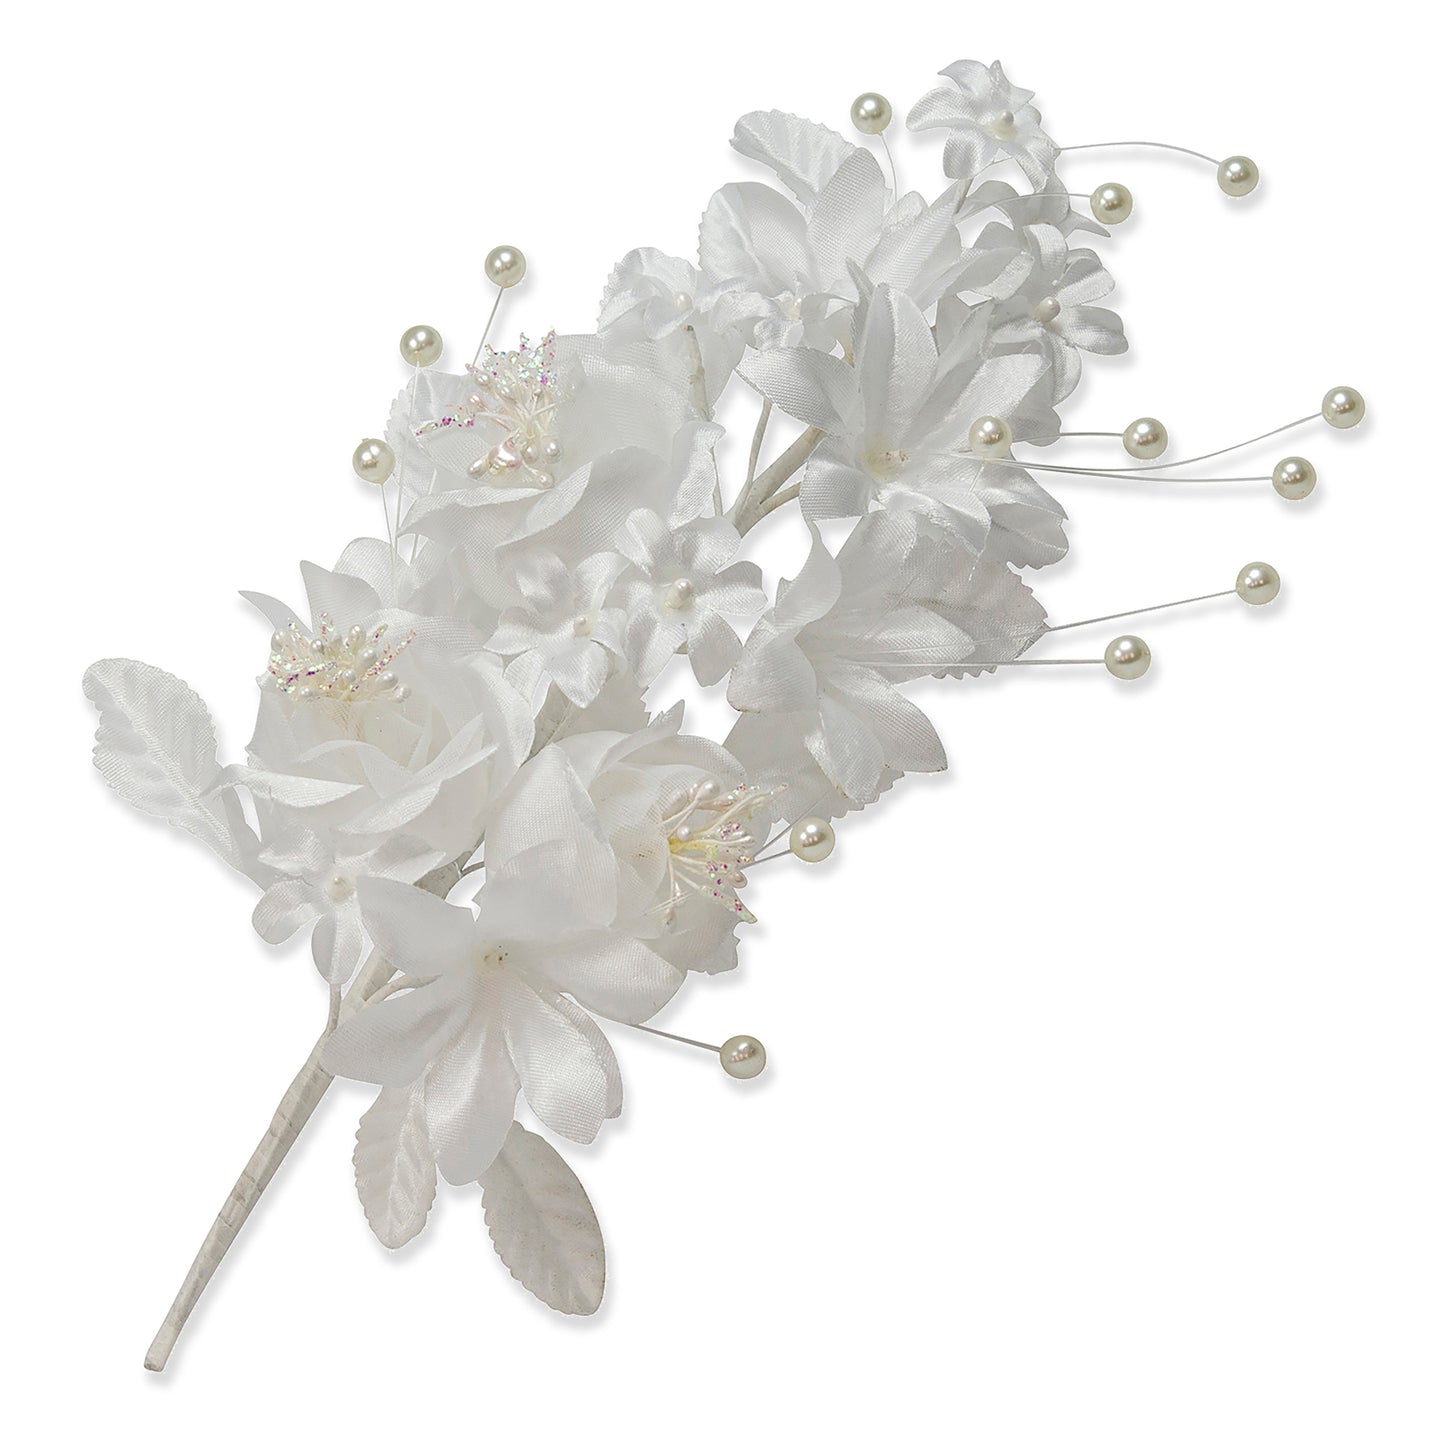 Vintage Bridal Cluster Flower Spray  - White